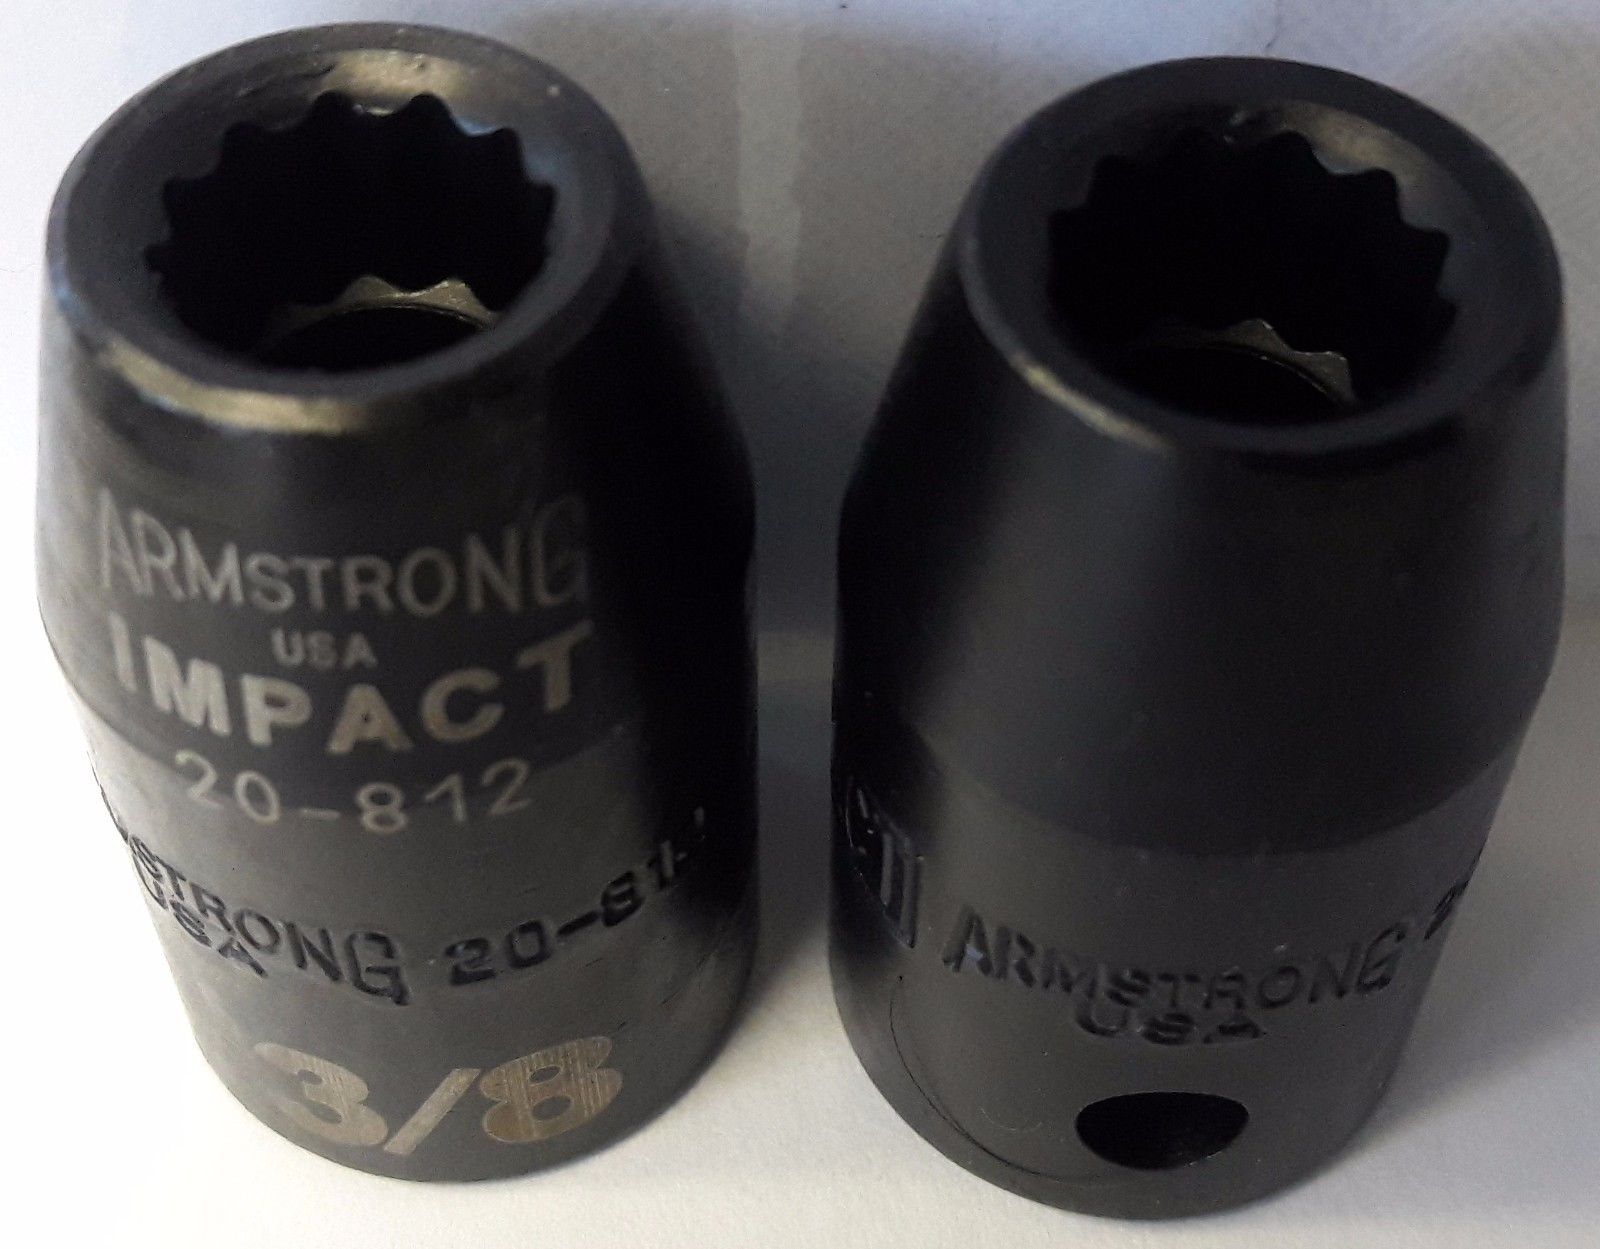 Armstrong 20-812 1/2" Drive 3/8" Impact Socket 12pt. USA 2PCS